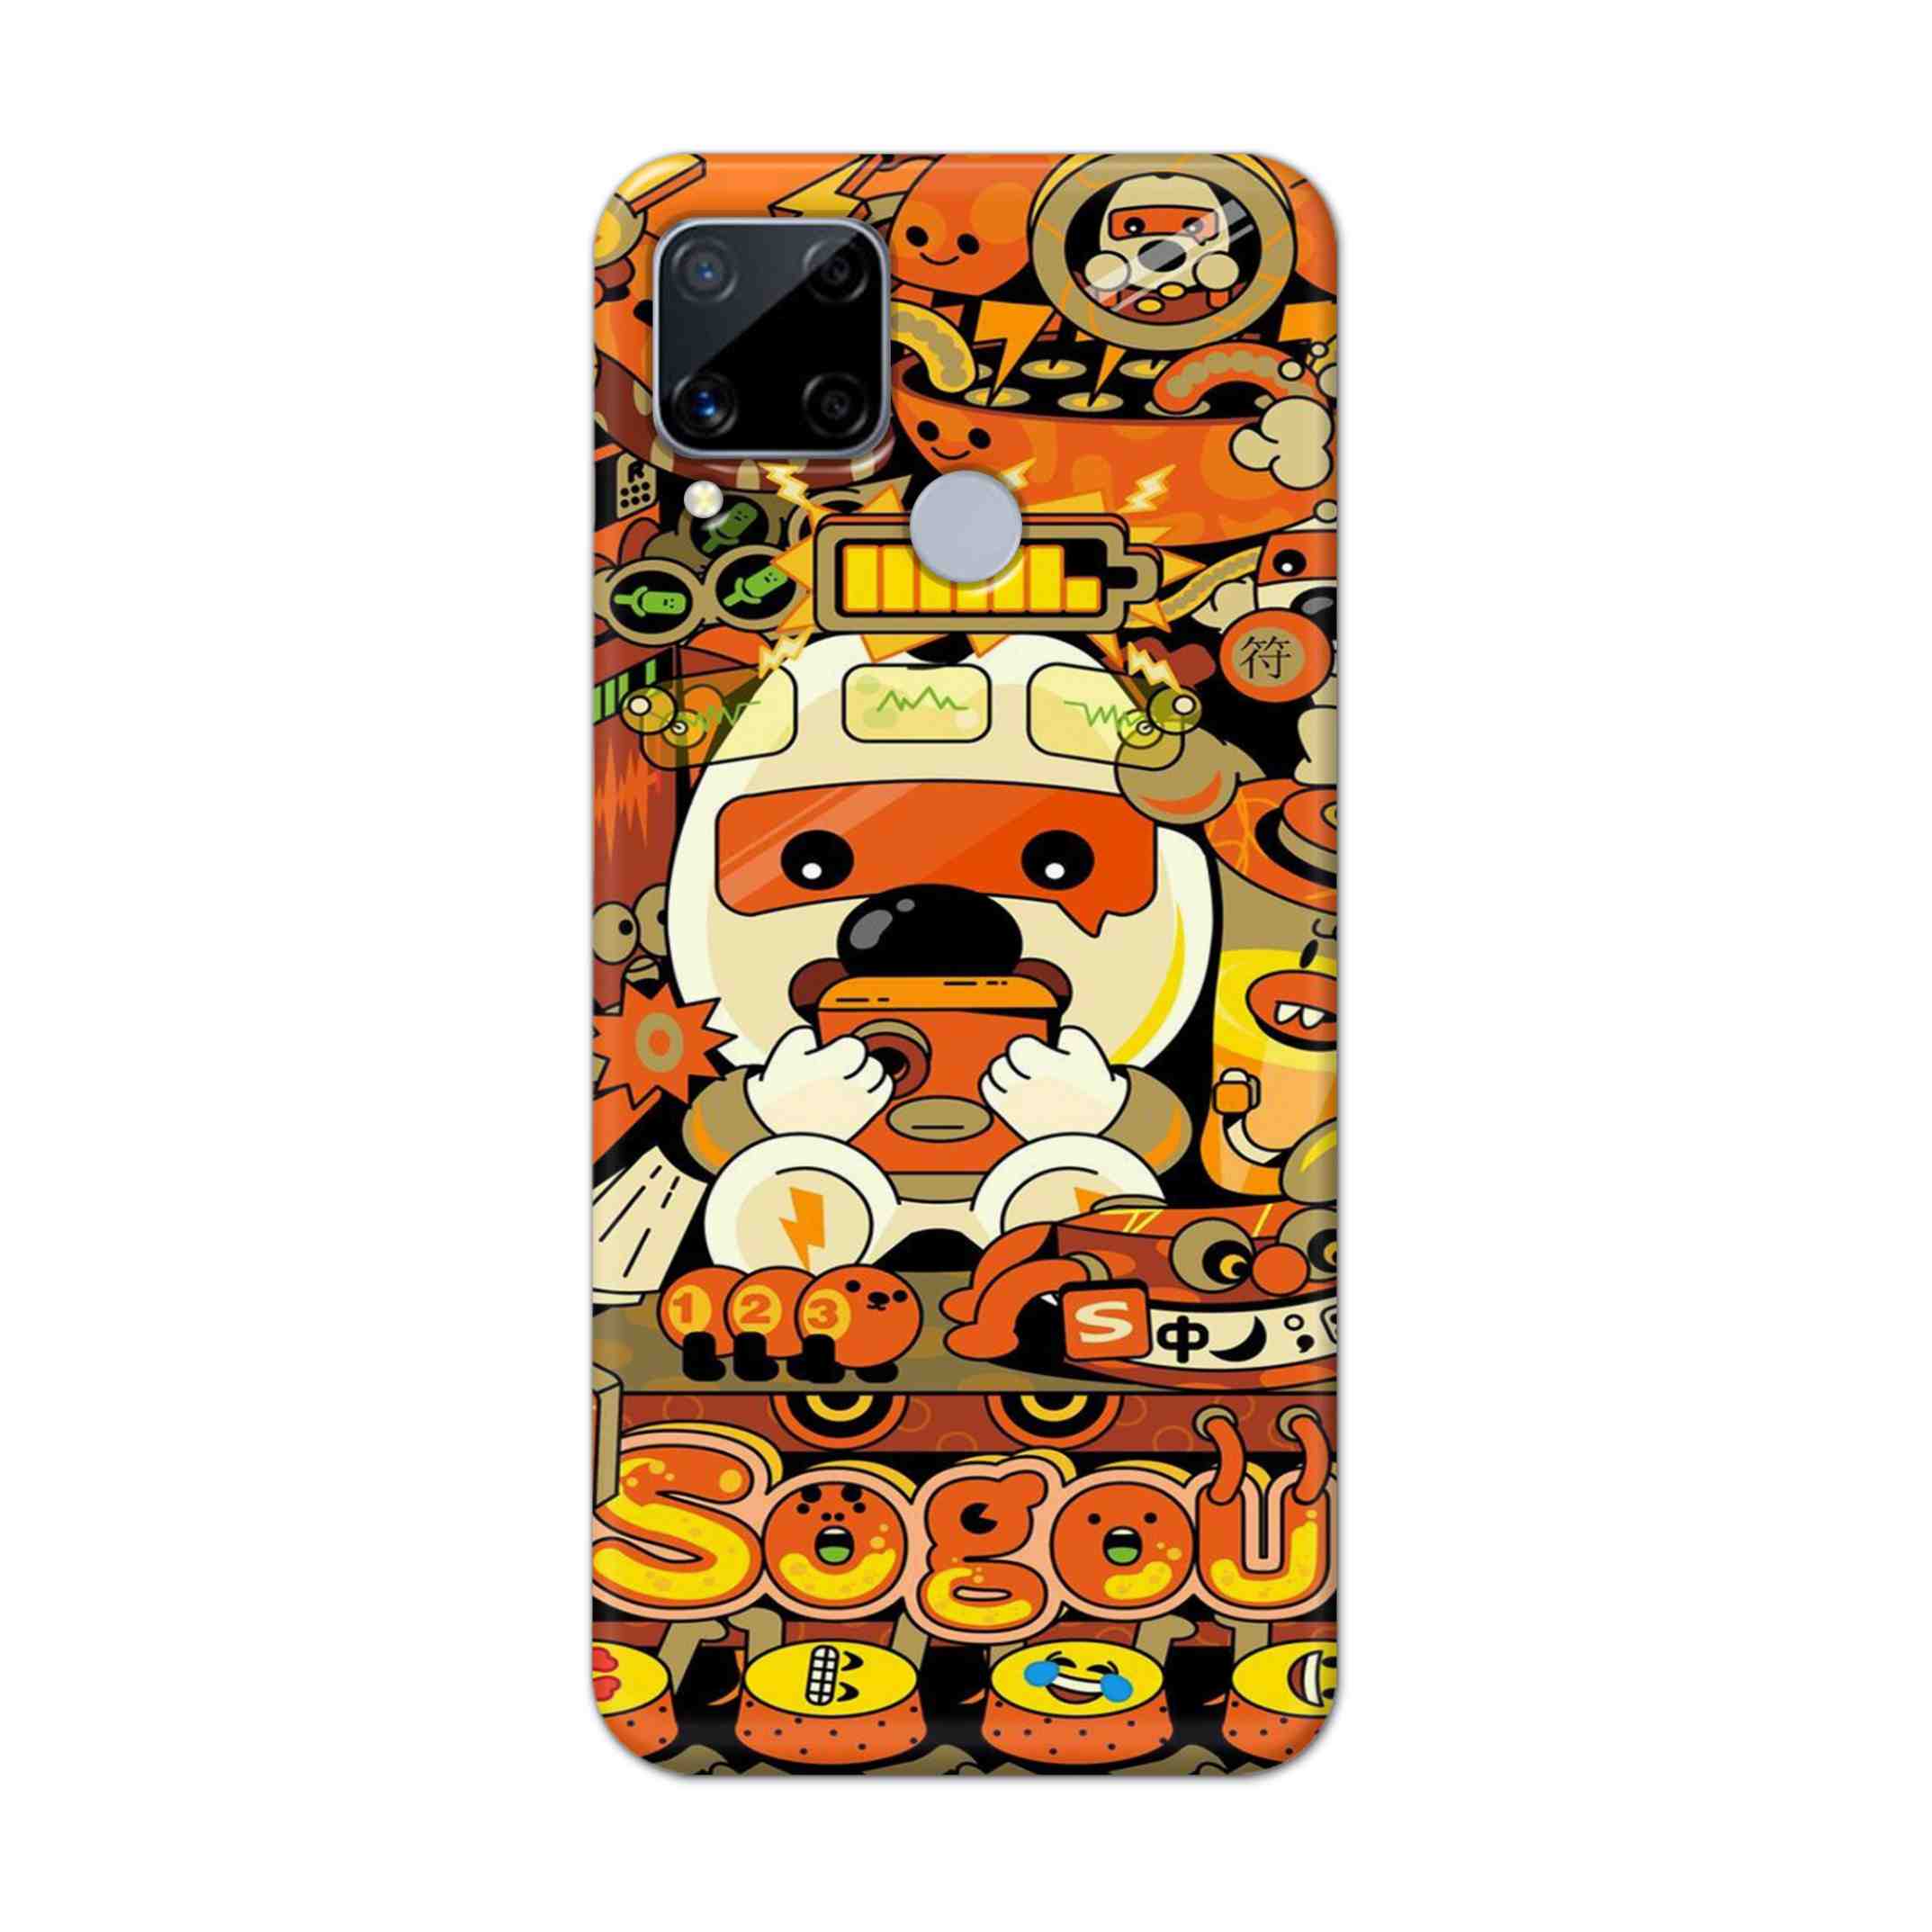 Buy Sogou Hard Back Mobile Phone Case Cover For Realme C15 Online